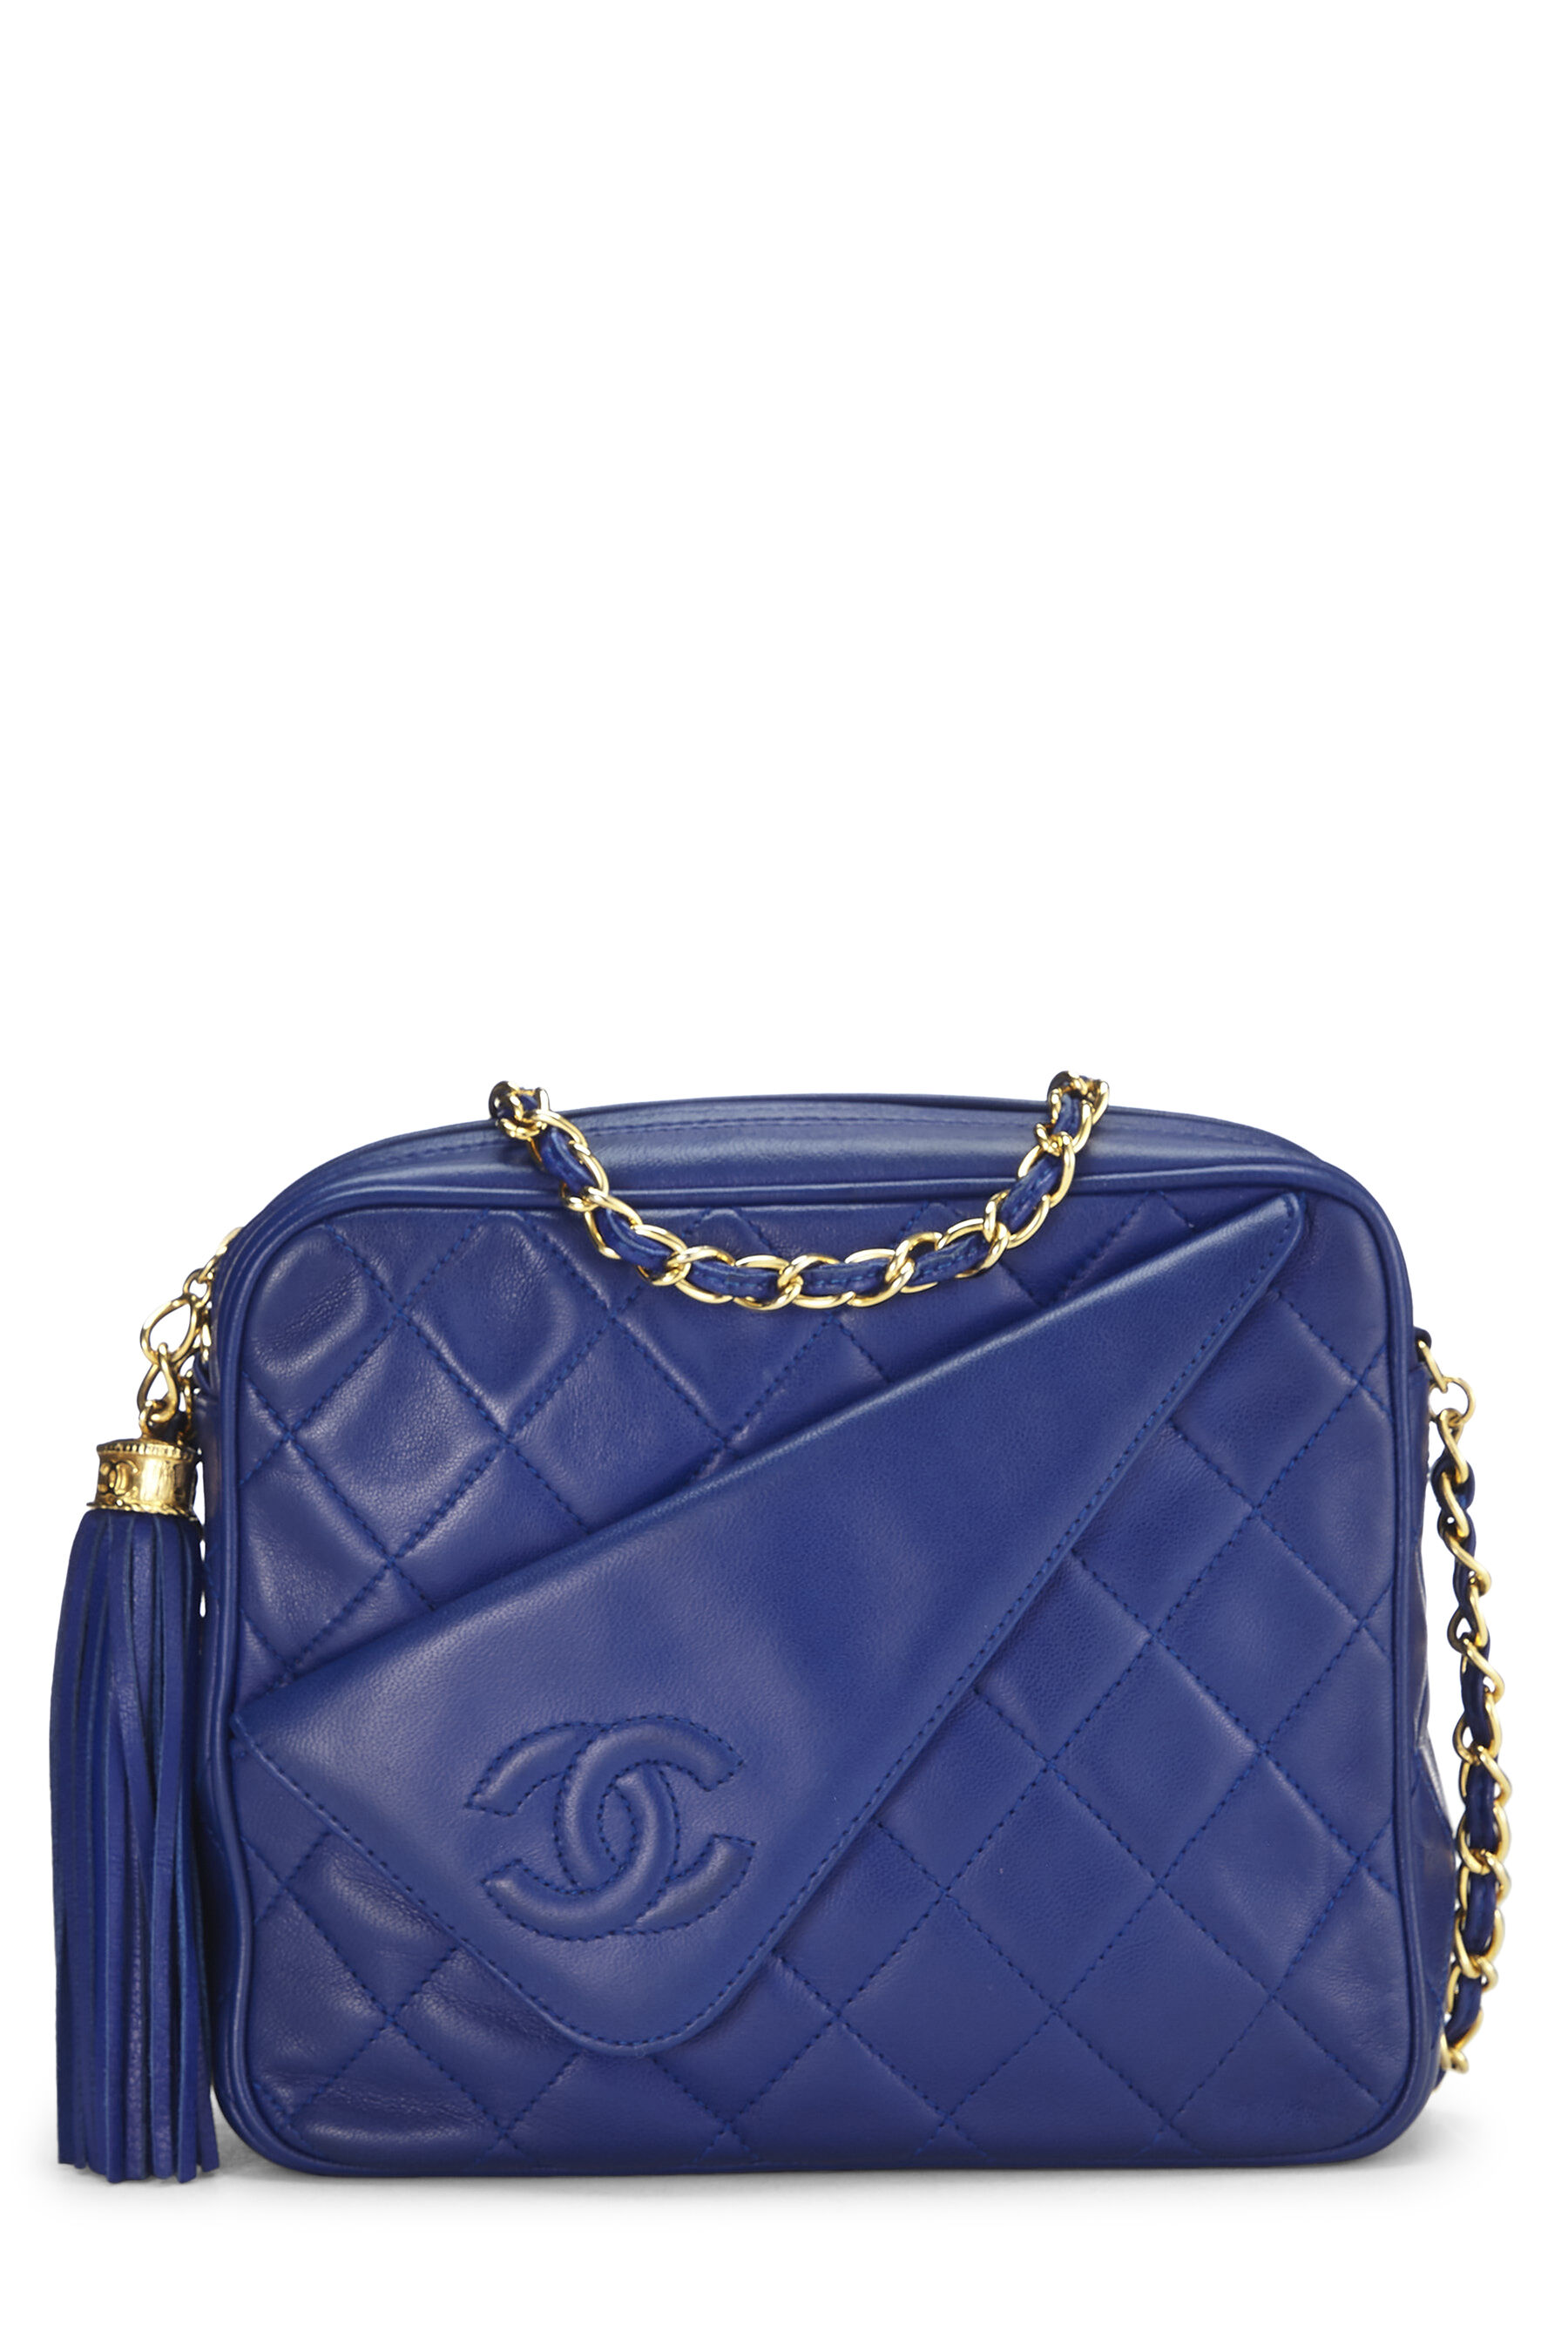 Chanel - Blue Lambskin Diagonal Camera Bag Small